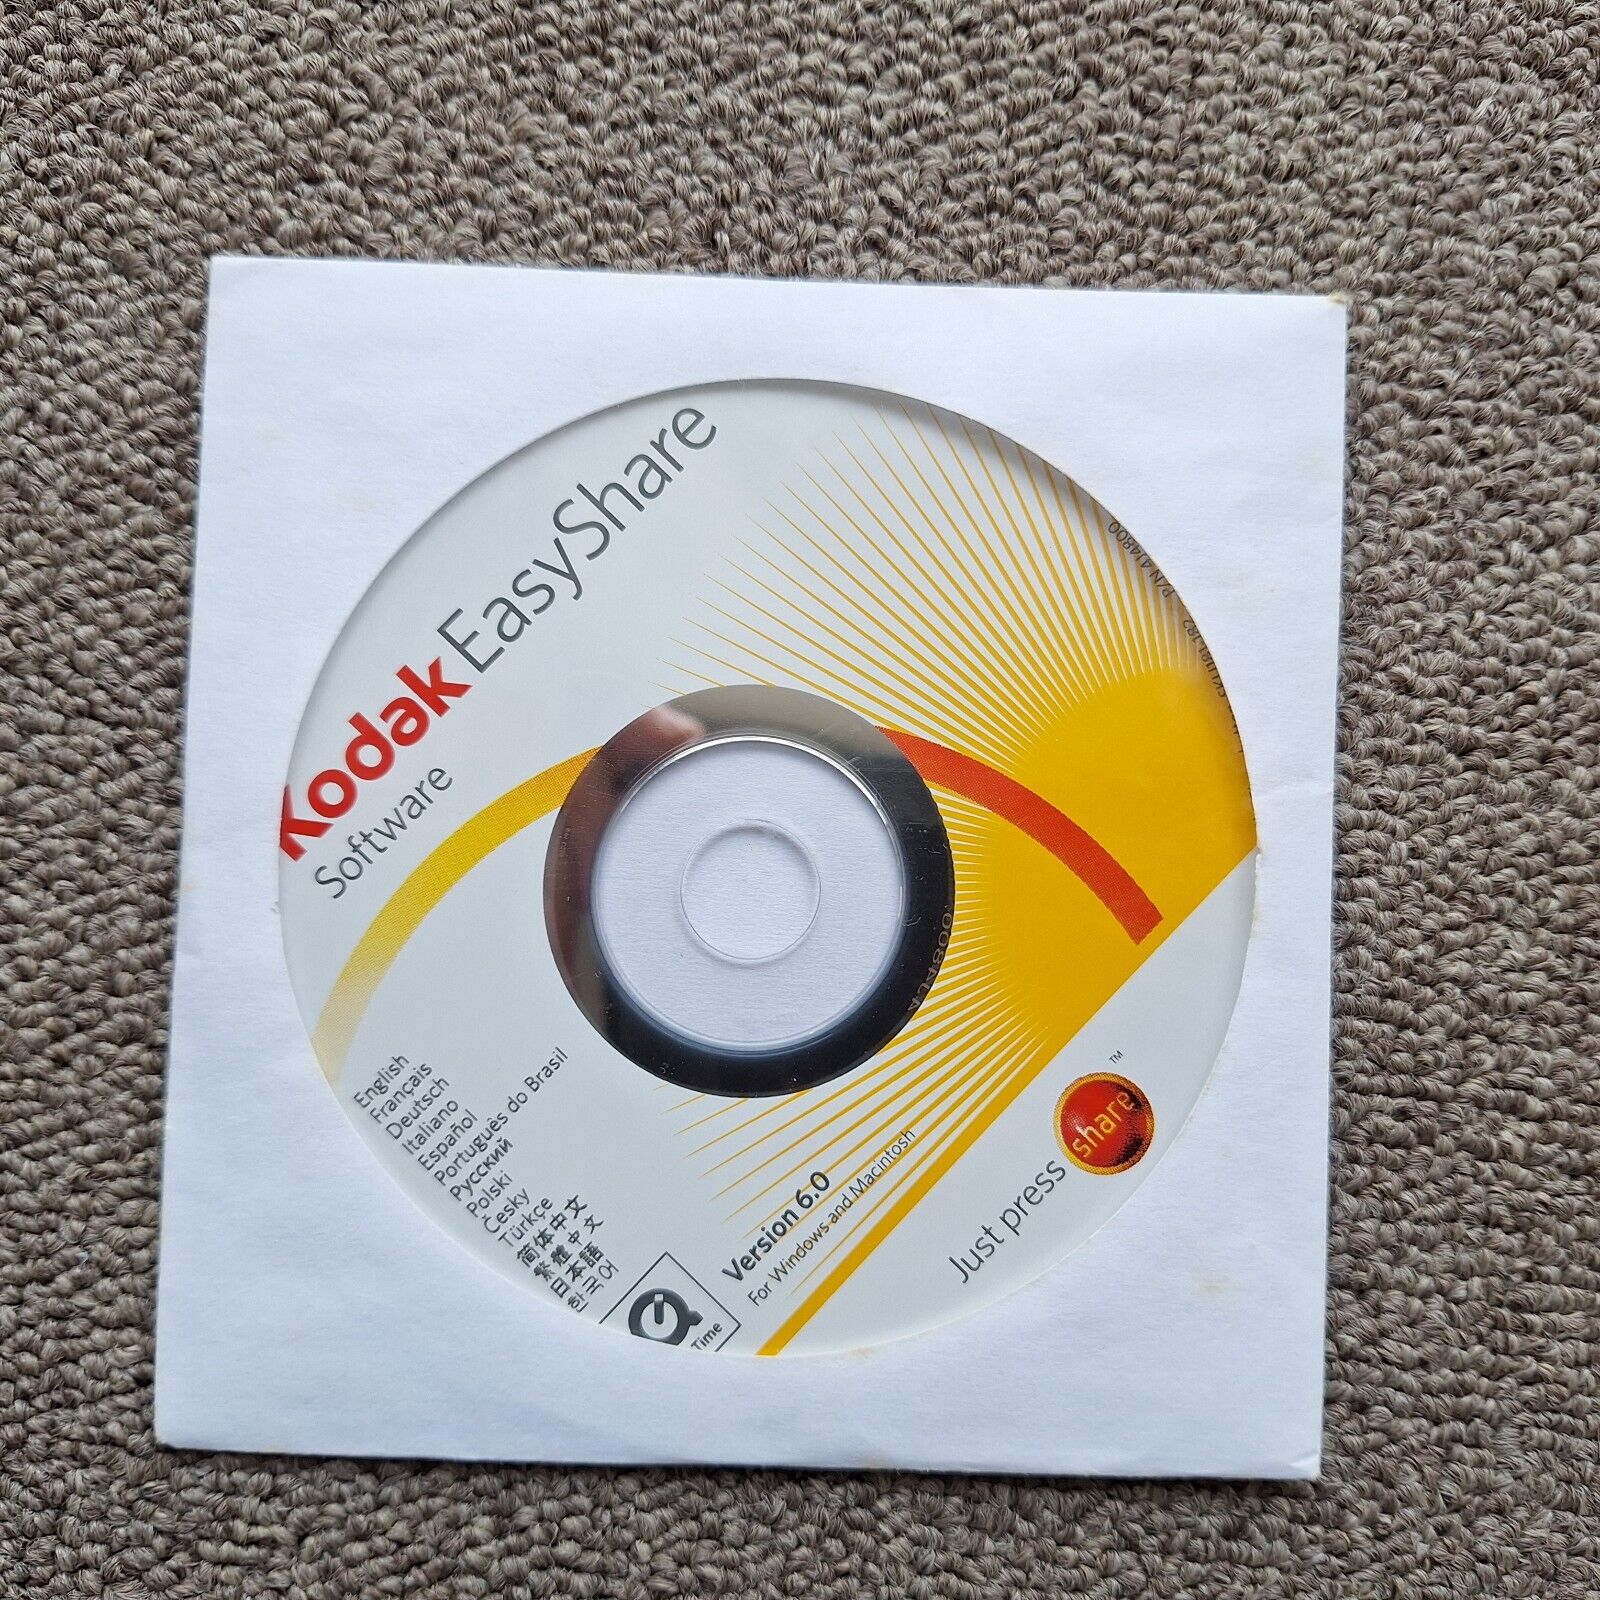 KODAK EasyShare Software Version 6.0 Windows Macintosh CD-Rom Disc Driver